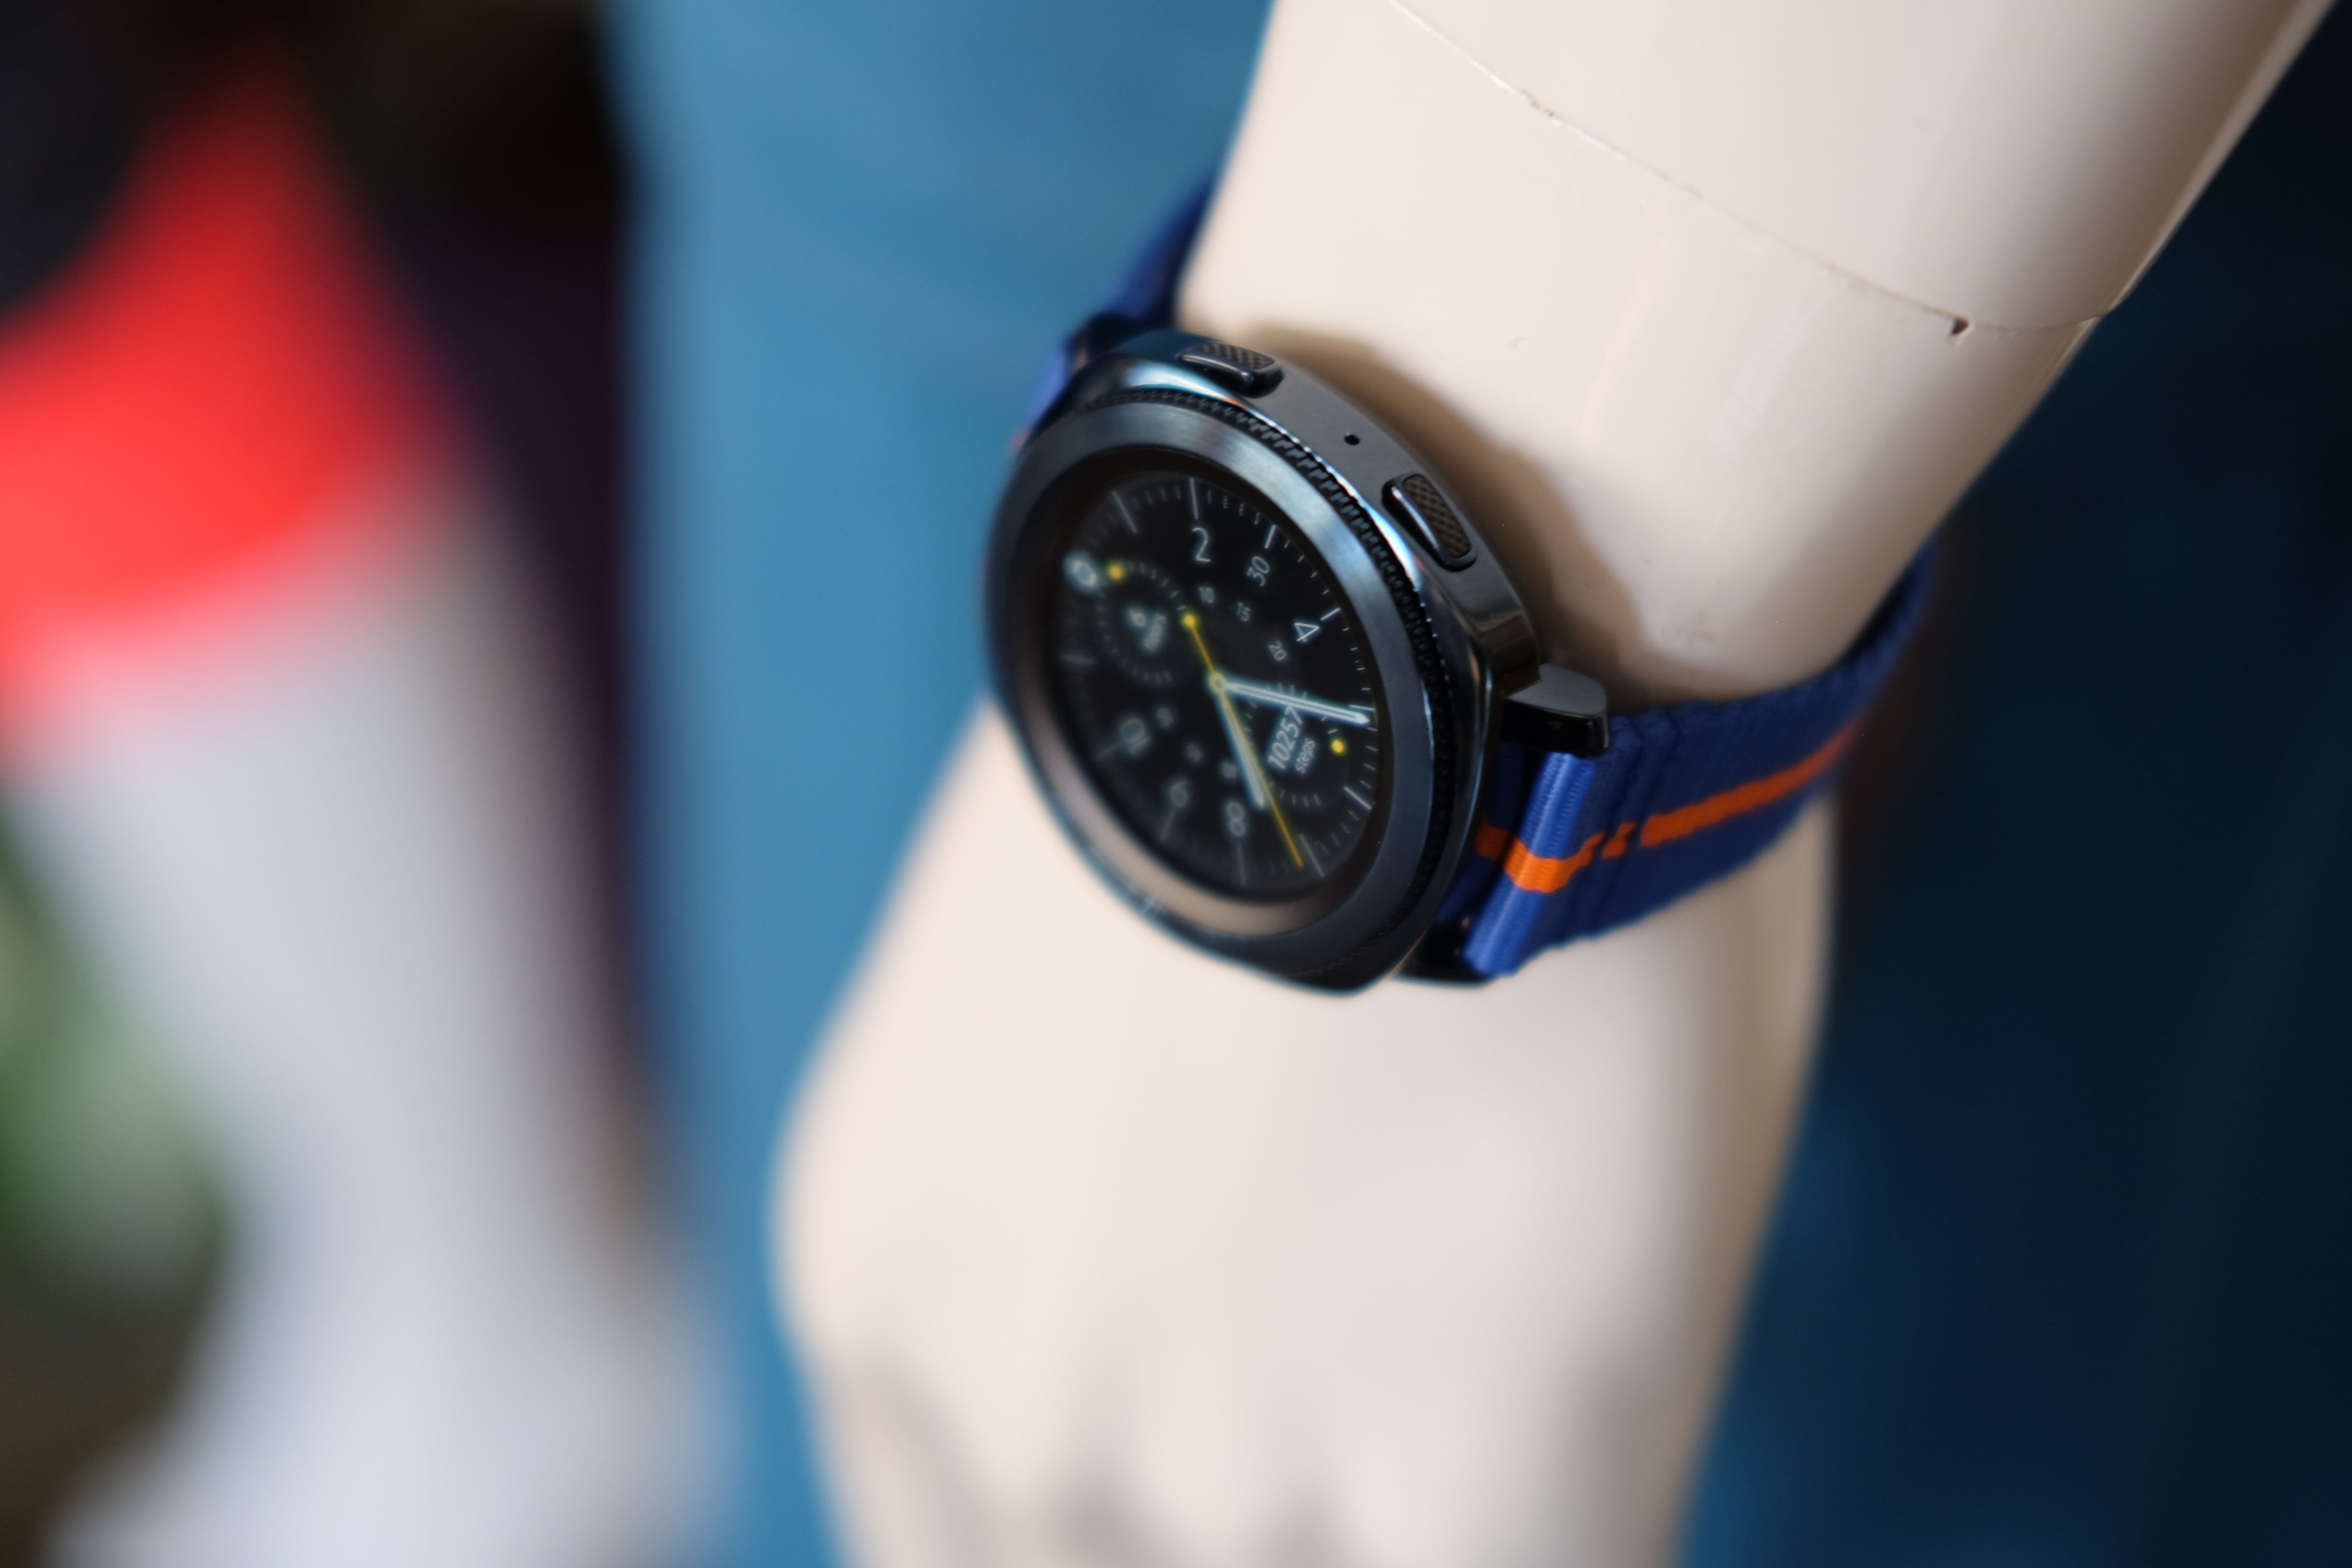 Samsung Gear Sport smartwatch on a display stand.